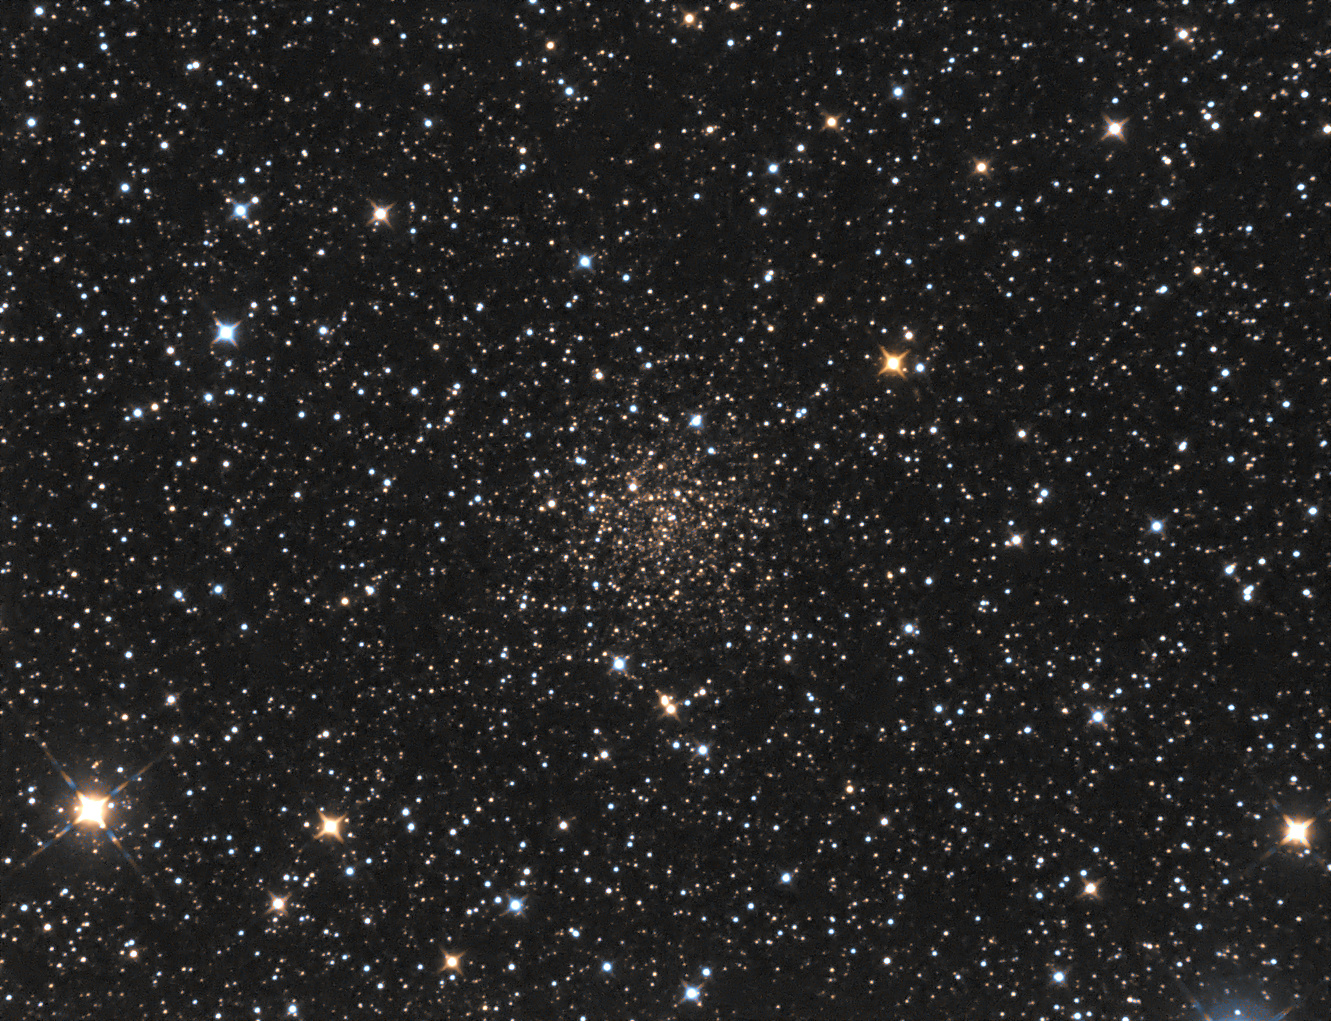 NGC-6791_W12-15x120s-b1_R-16x240s-b1_G-10x240s-b1_CBG-CSC_B-R_0.1_-SC_ST-15-3-2.5_SA-35-20_G-97.jpg